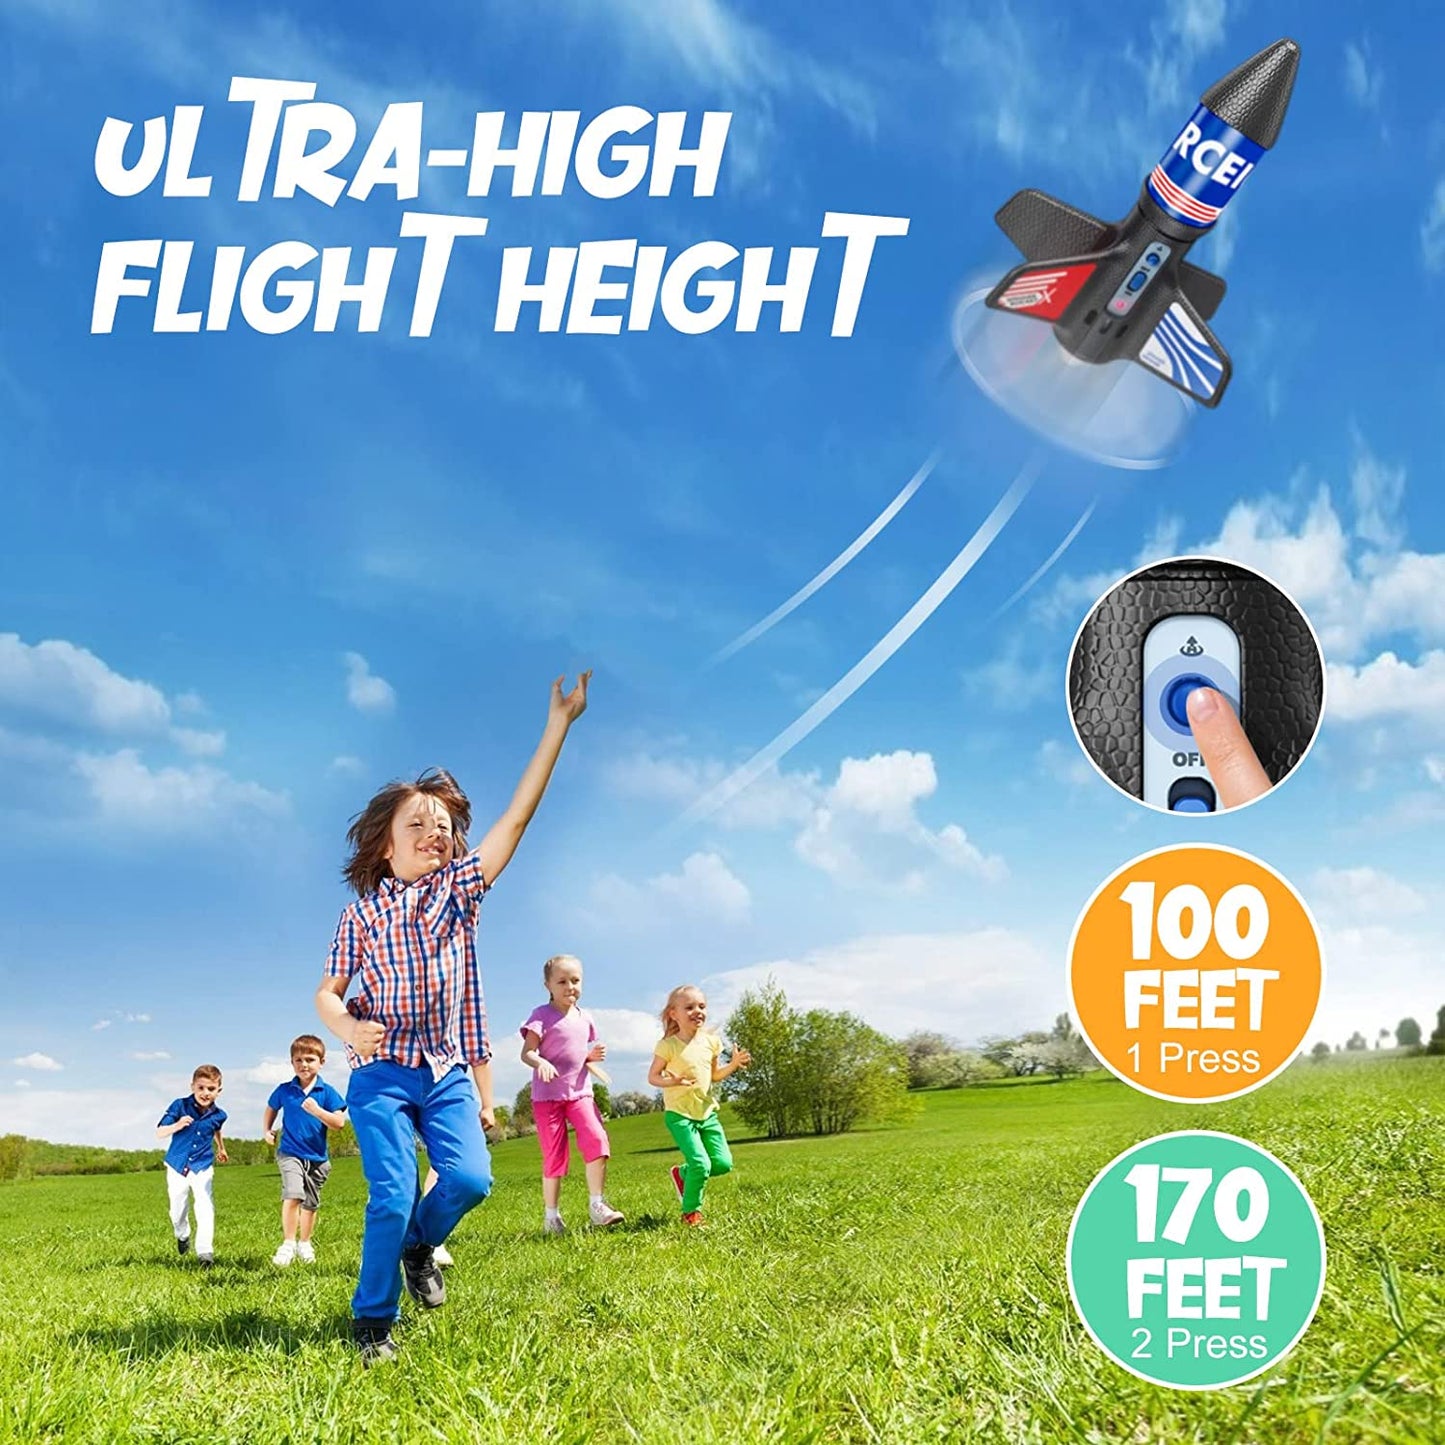 Rocket Launcher, 170 Feet of Flight Altitude, Model Rocket Kits with Launch Set